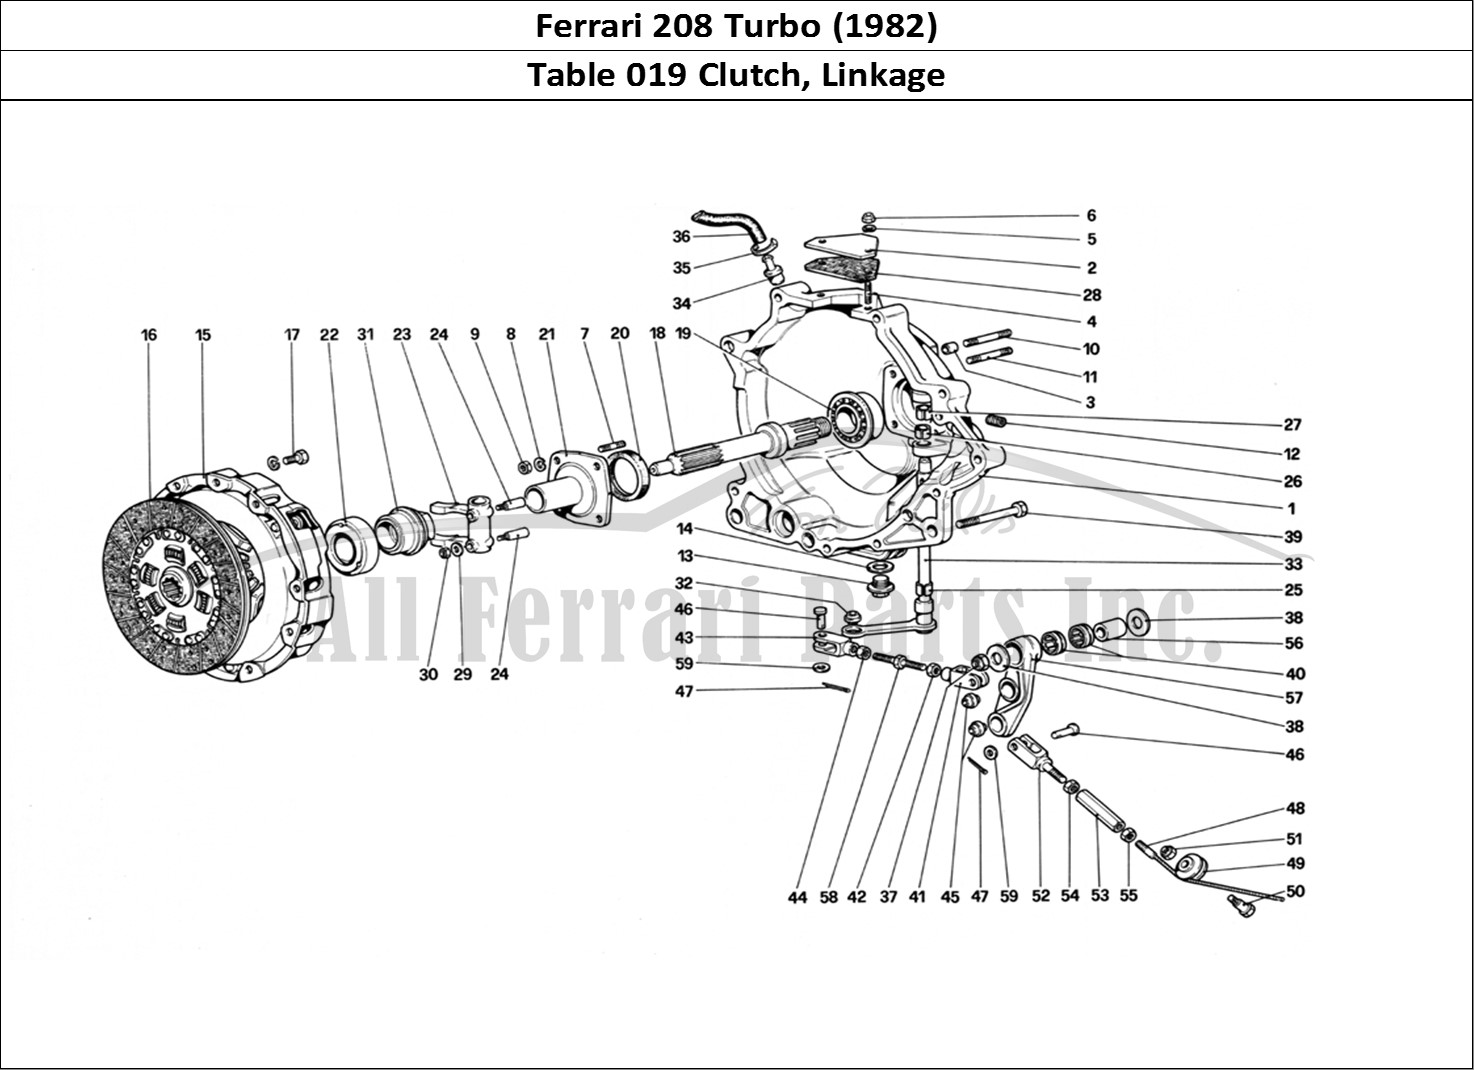 Ferrari Parts Ferrari 208 Turbo (1982) Page 019 Clutch and Controls